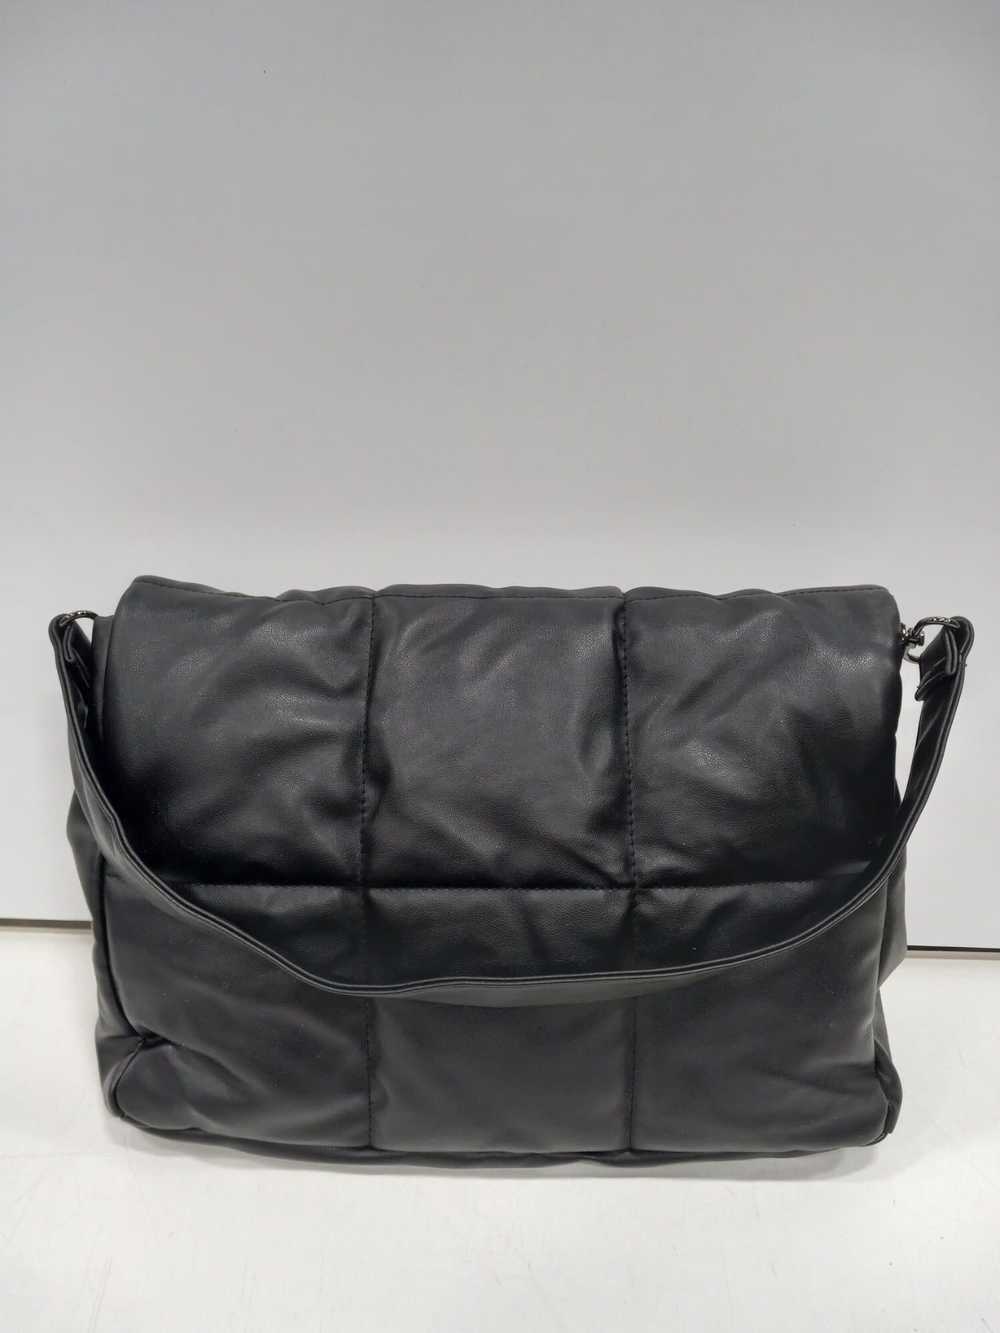 Sondra Roberts Women's Black Leather Purse - image 2